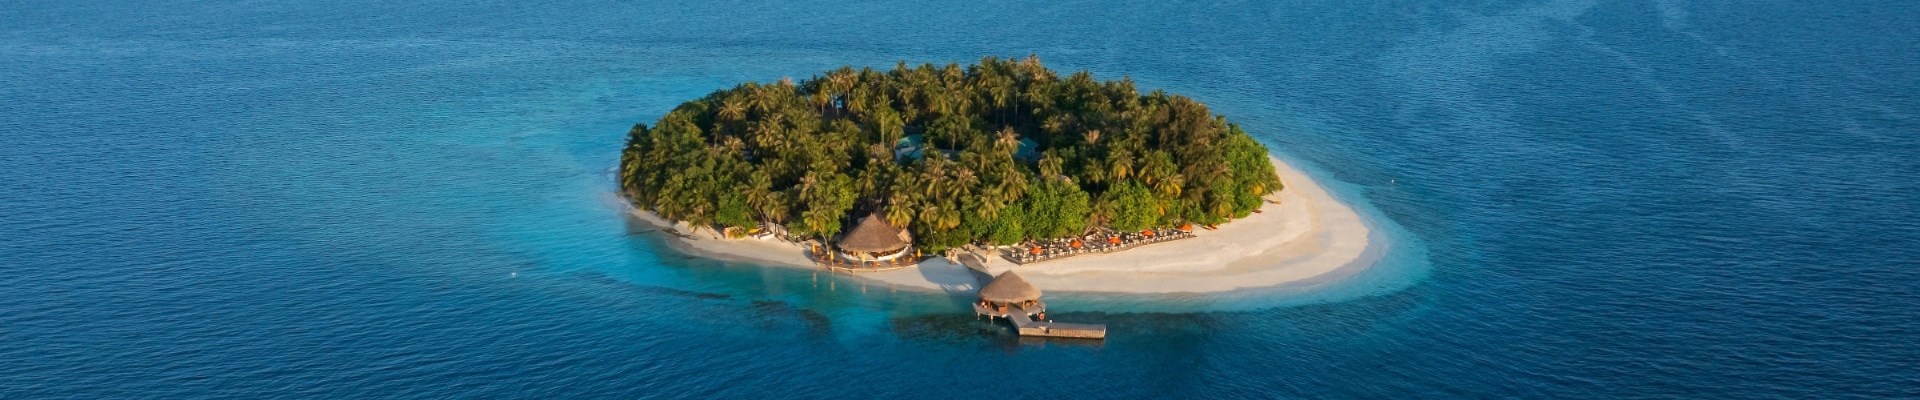 Angsana Ihuru  - North Malé Atoll, Maldives